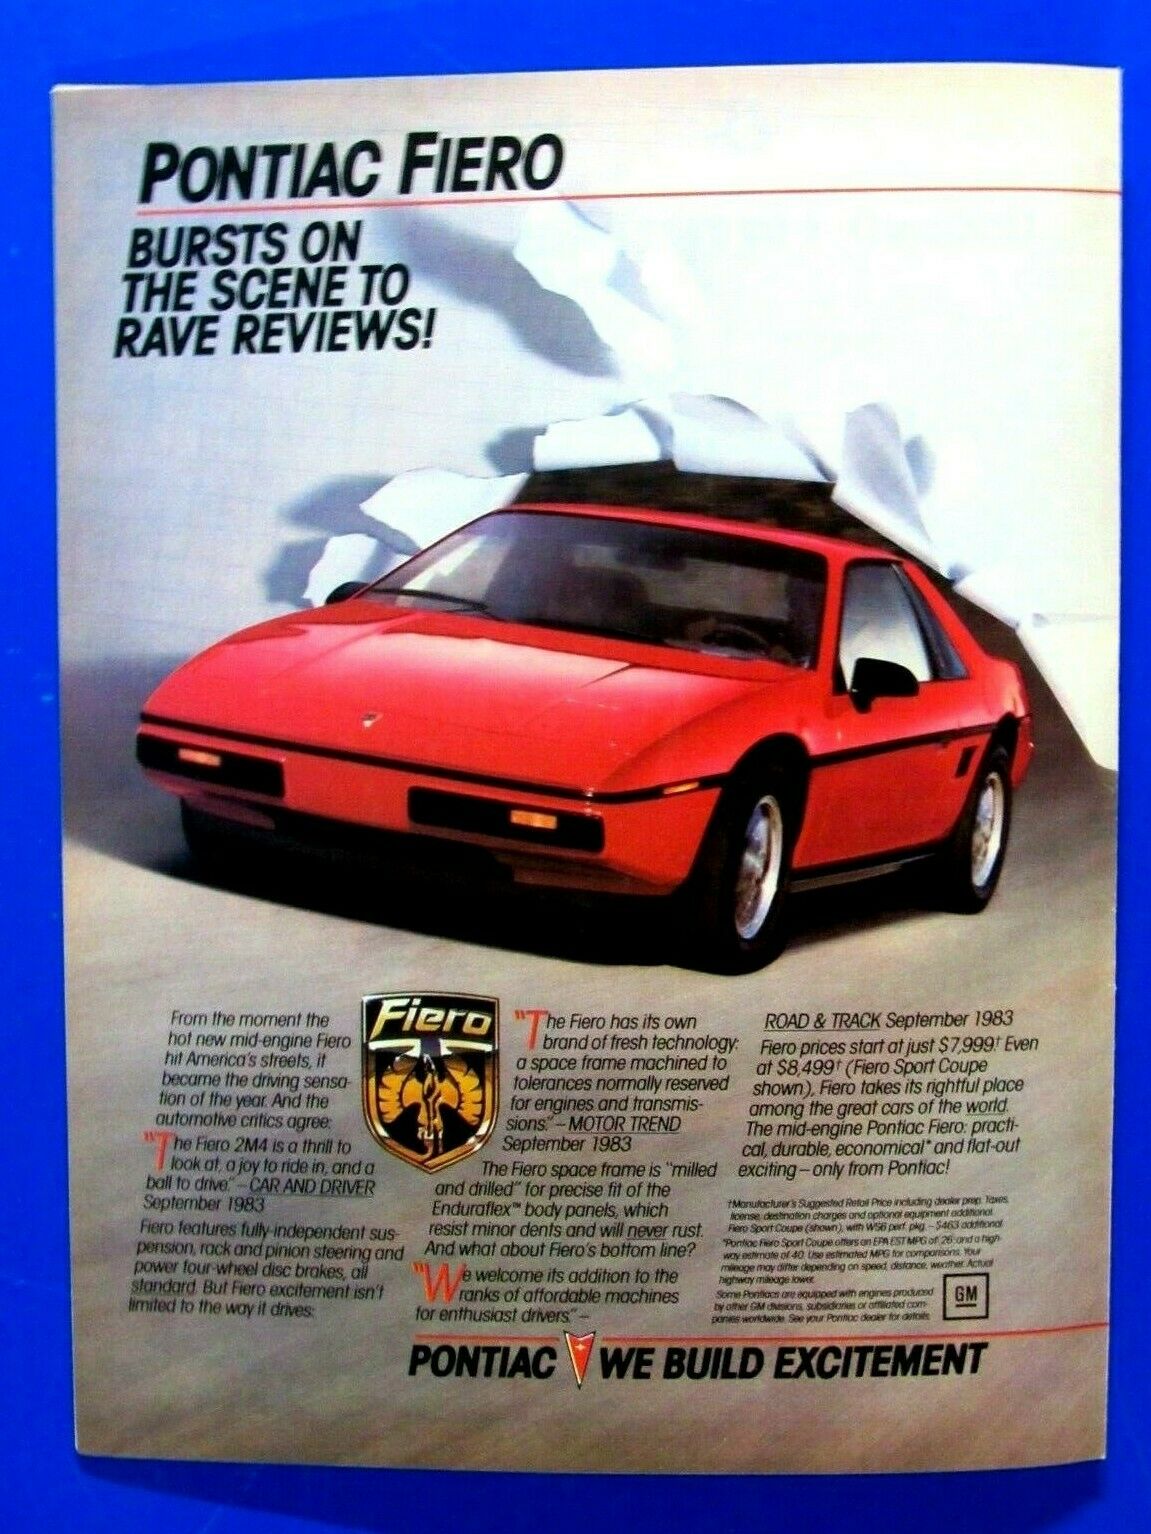 1984 Pontiac Fiero Burst On Scene To Rave Reviews! Original Print Ad 8.5 X 11"